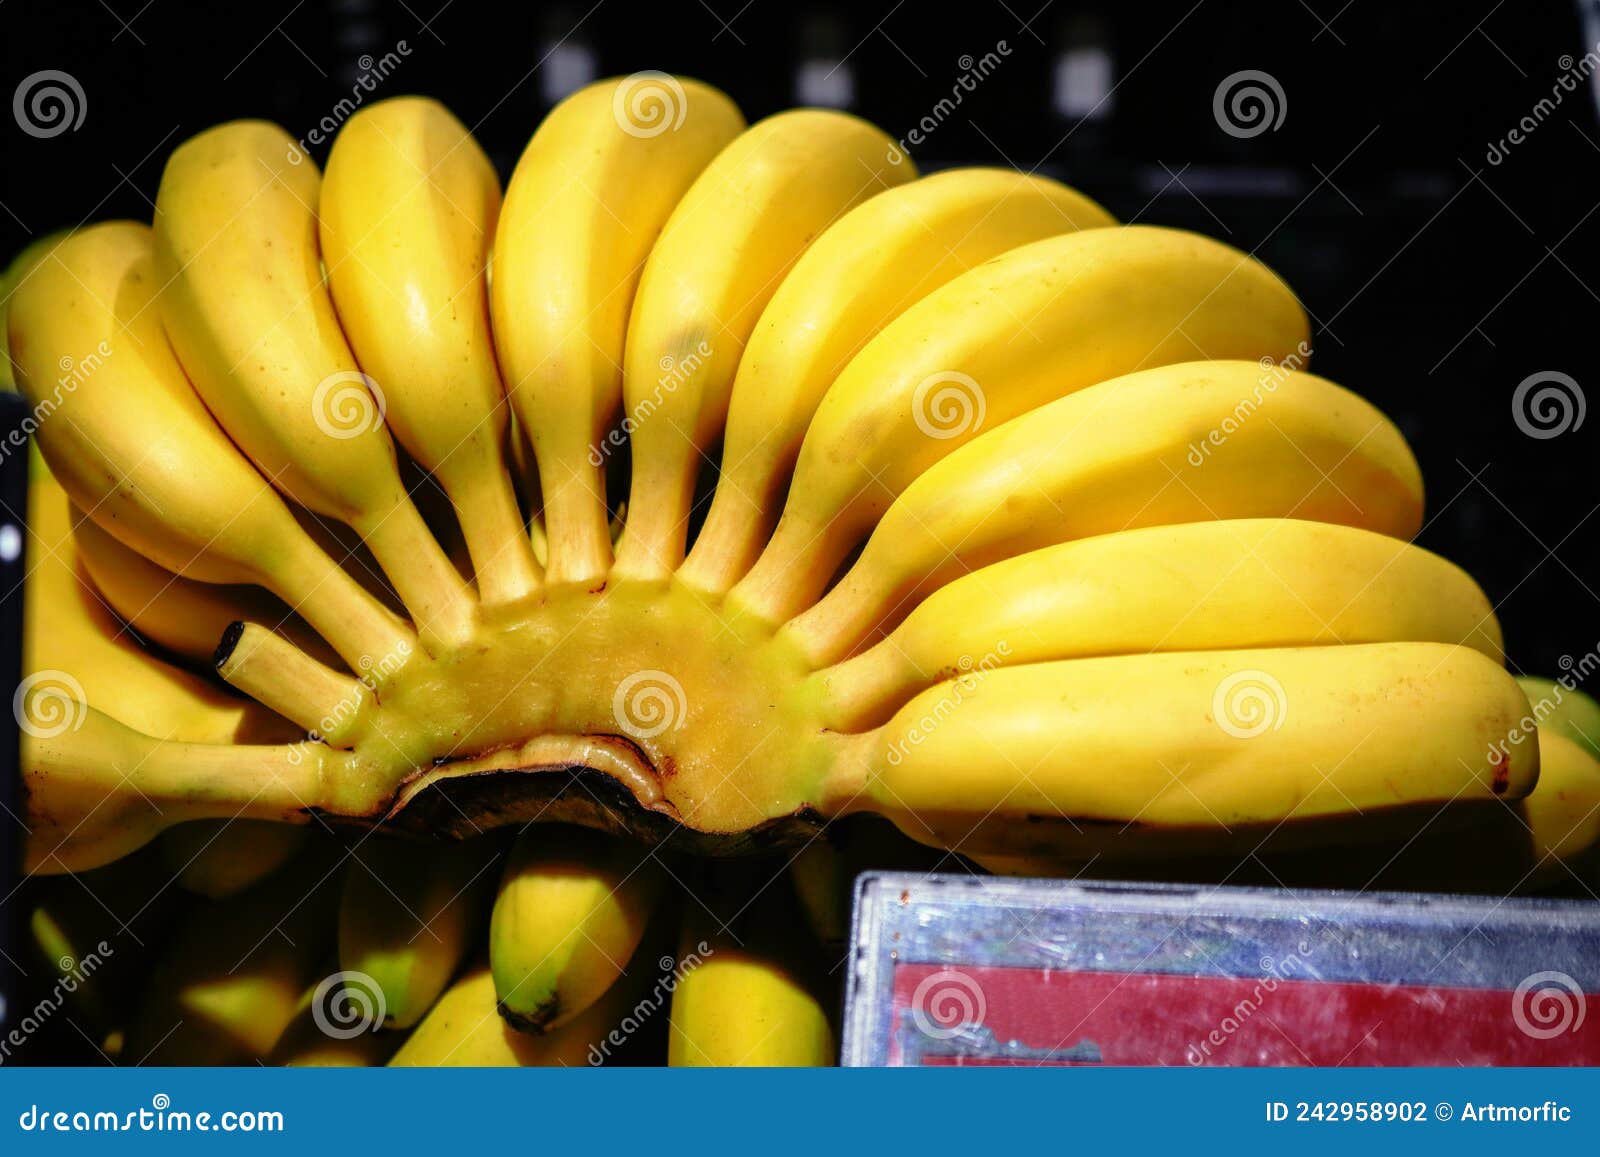 https://thumbs.dreamstime.com/z/bunch-bananas-yellow-evening-light-black-backgorund-showcase-242958902.jpg